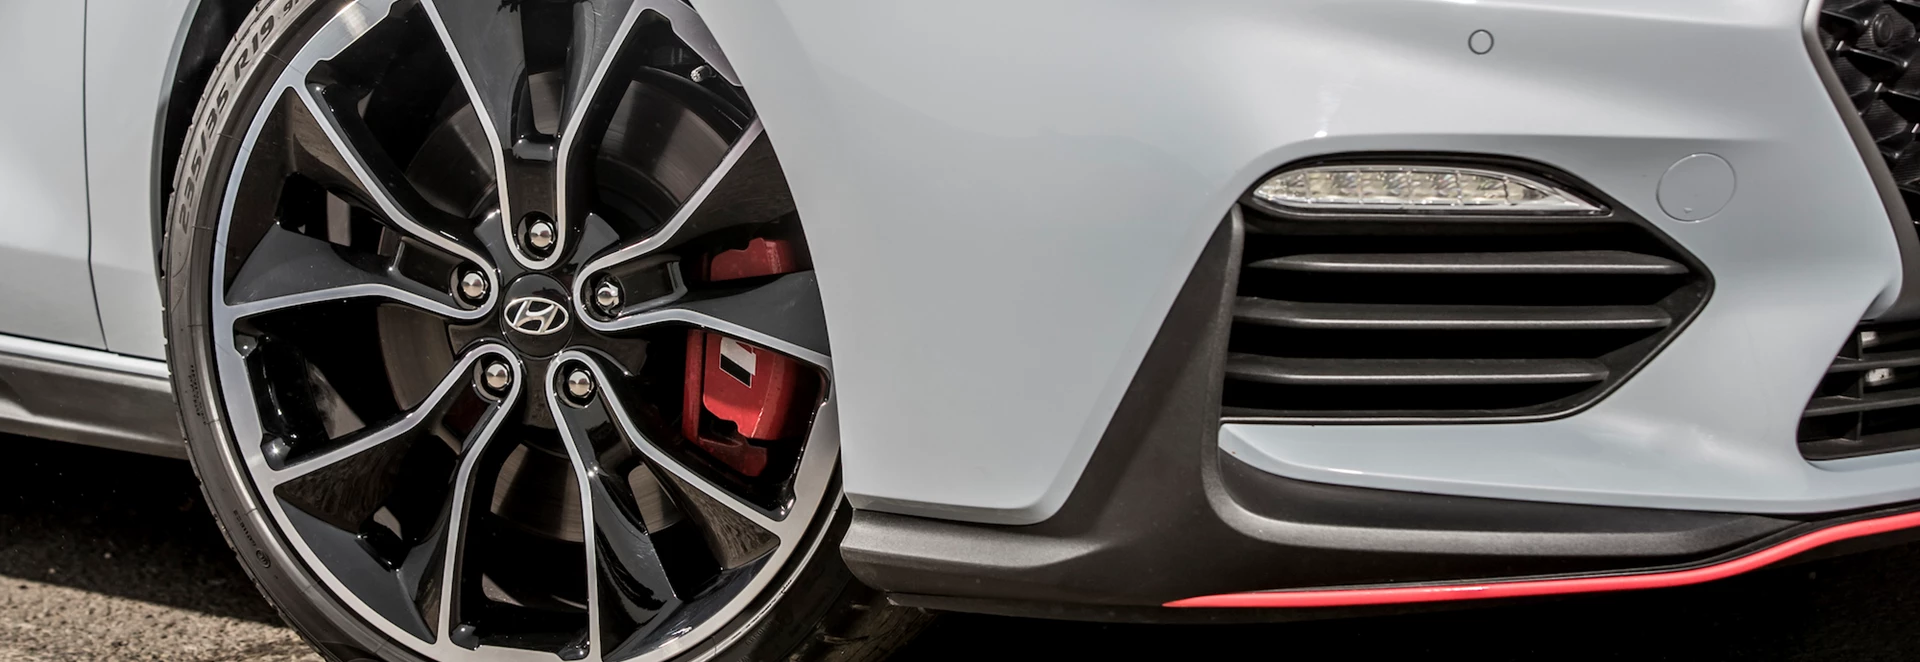 10 best-looking car alloy wheels of 2018